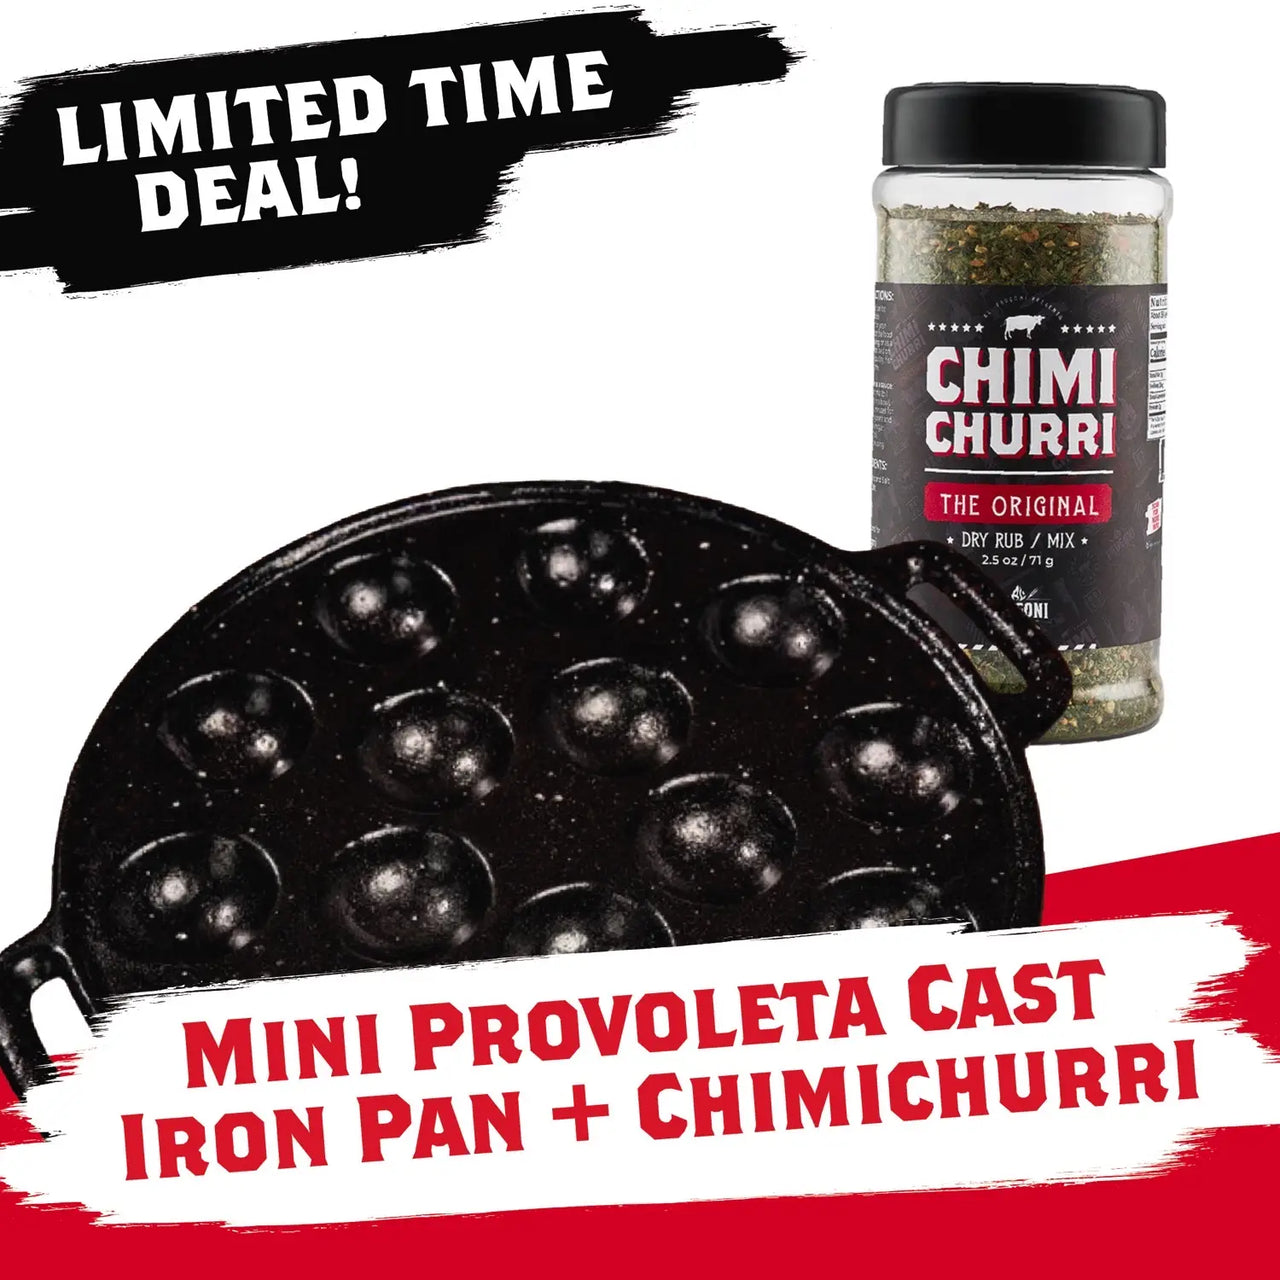 Limited Time Deal: Mini Provoleta Cast Iron Pan + Chimichurri Original